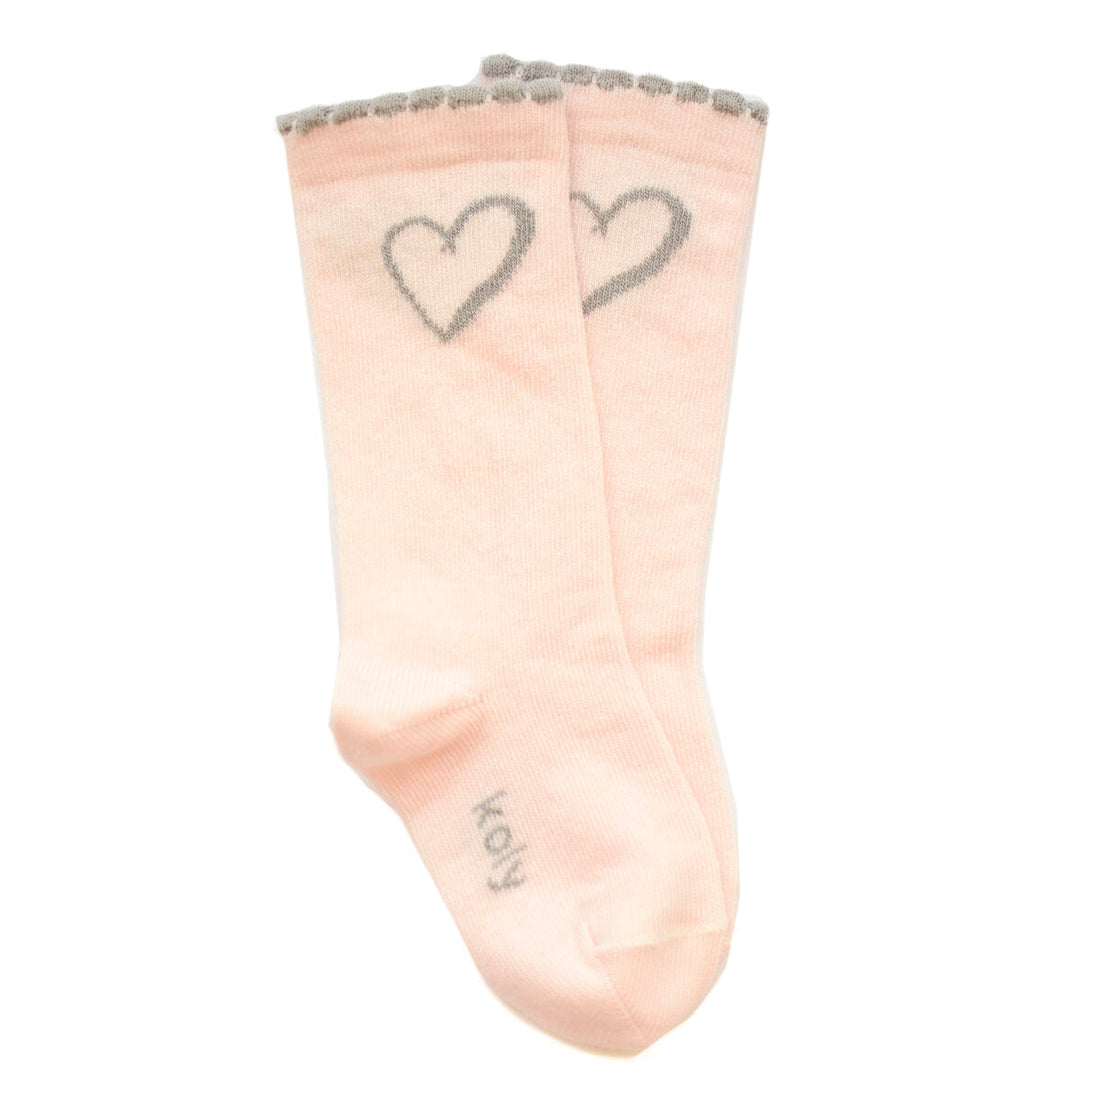 Knee Socks with Heart